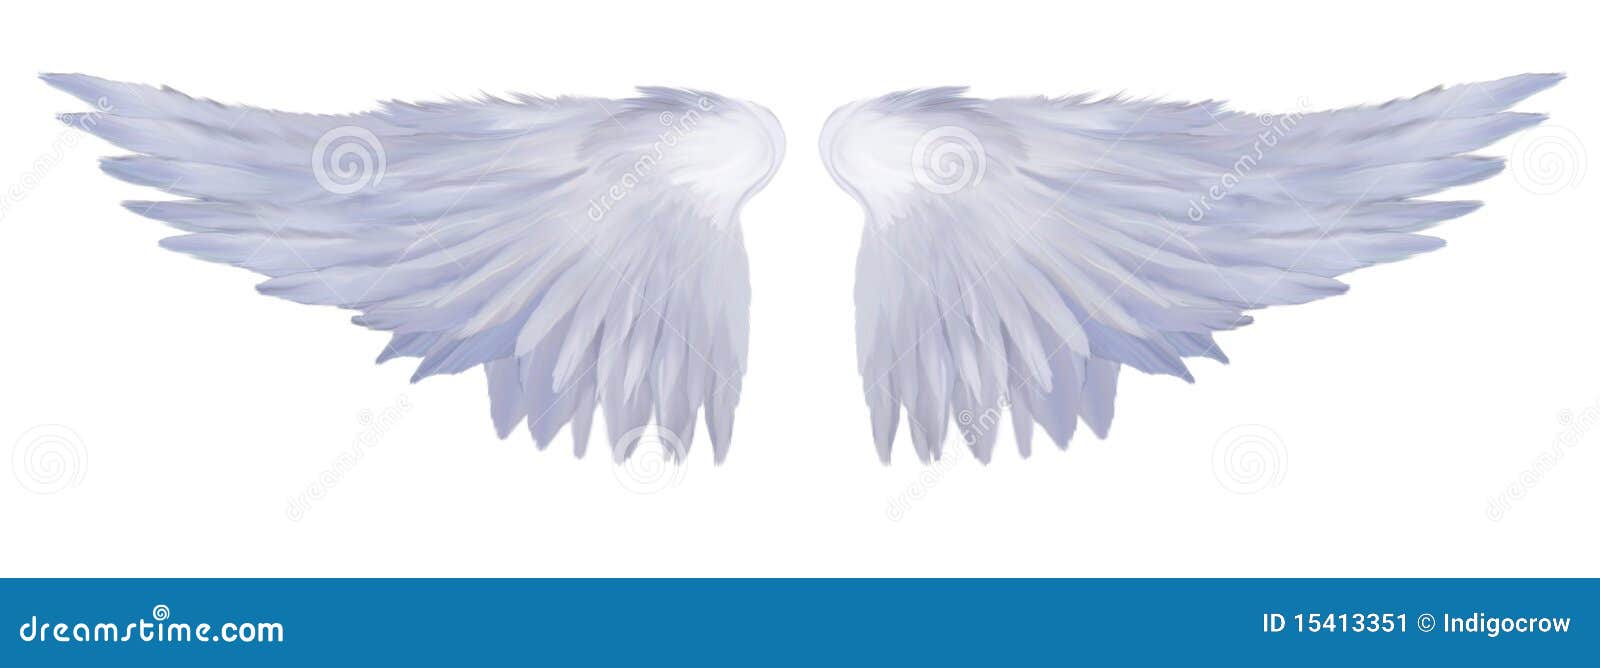 angelic wings